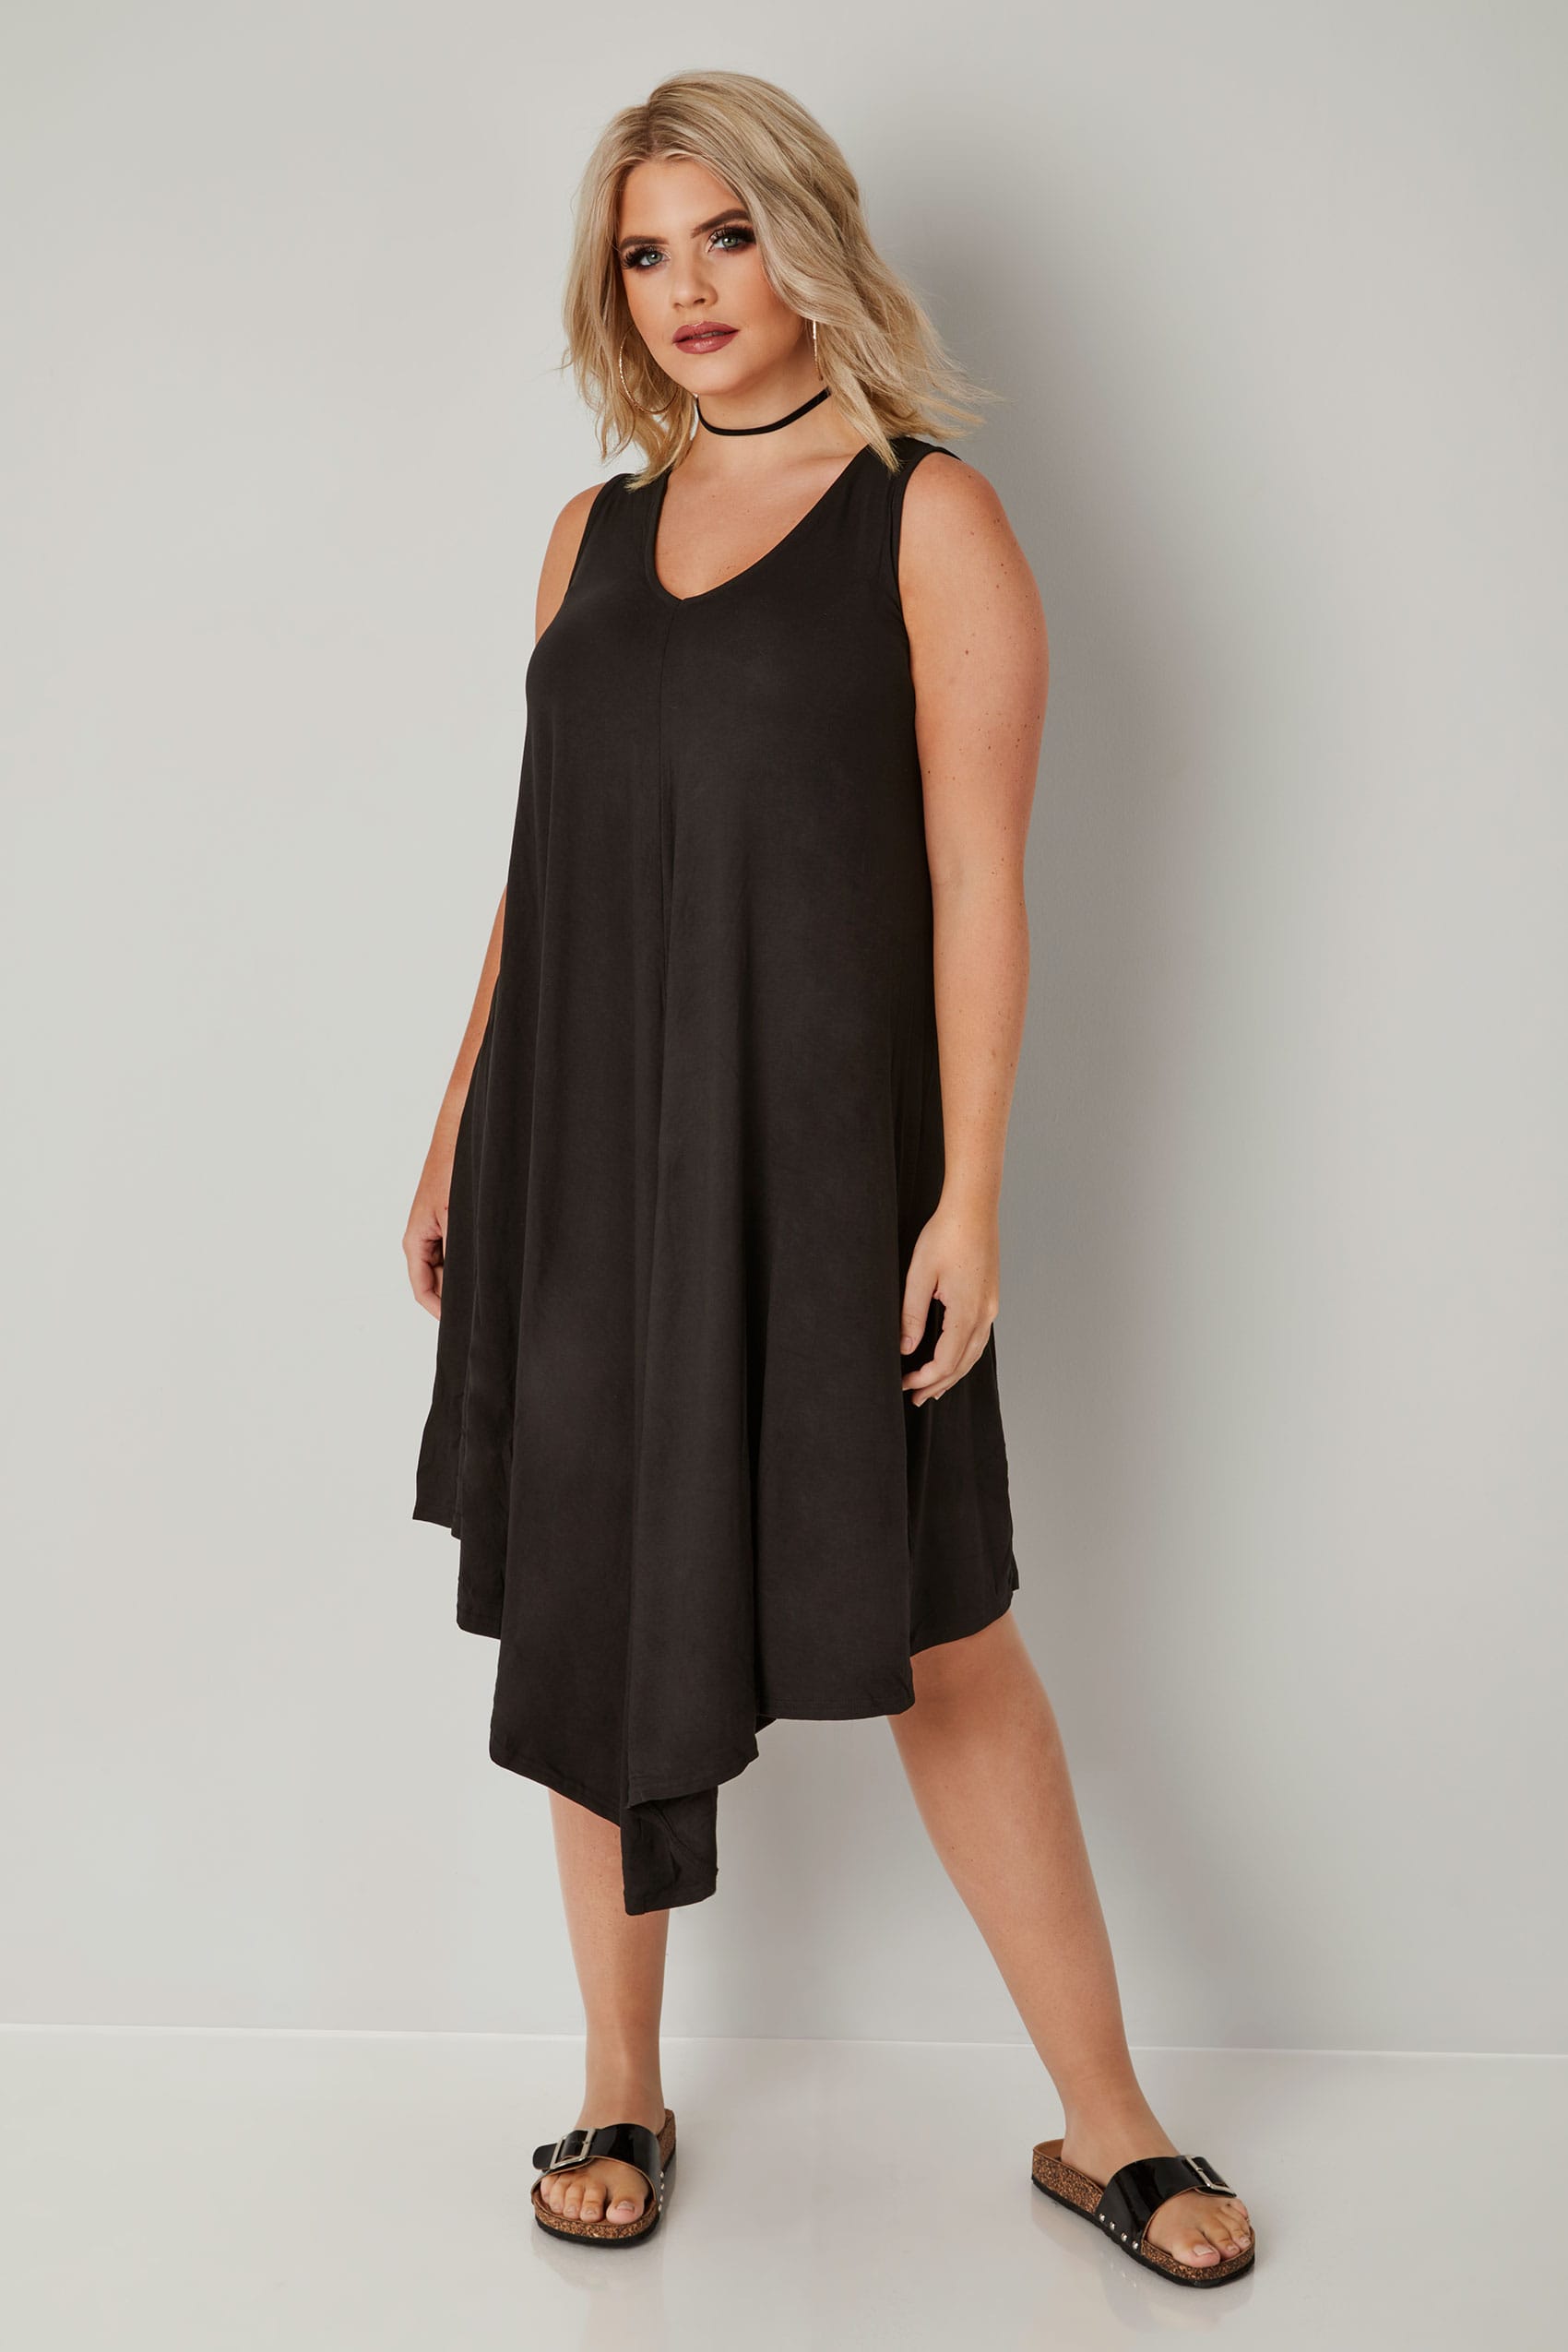 Black Jersey Swing Tunic Dress, Plus size 16 to 32